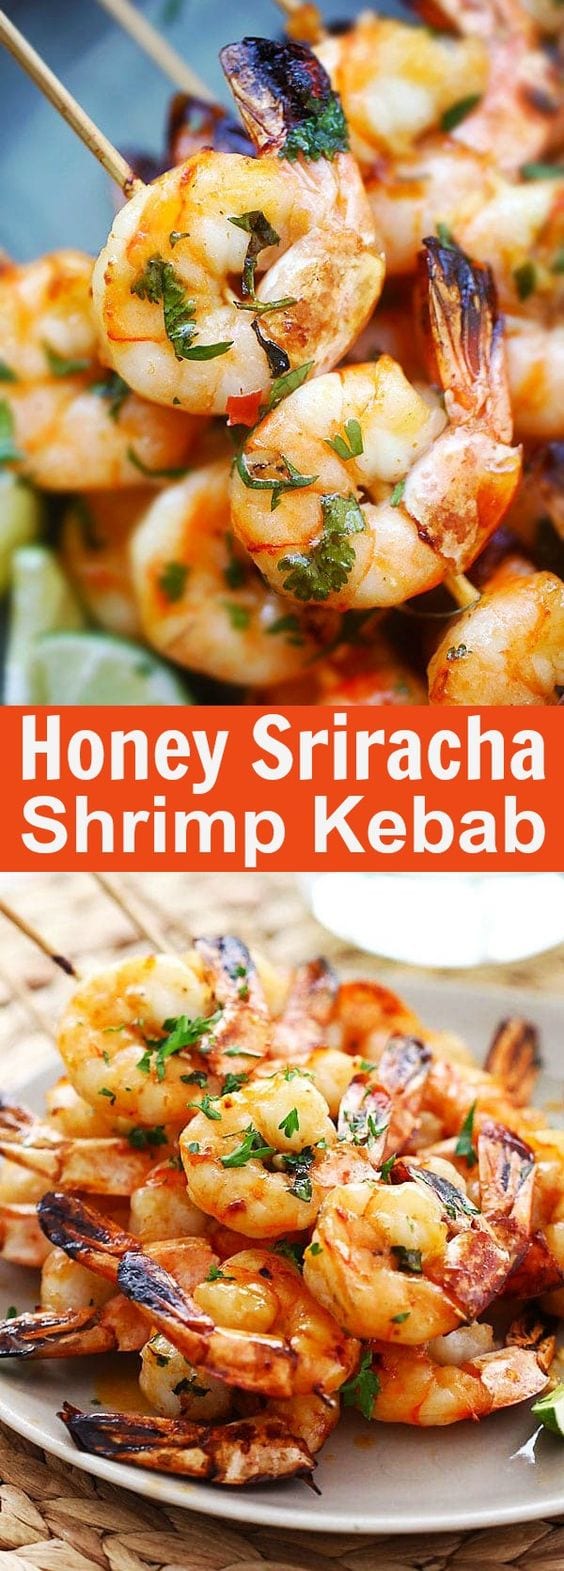 Honey Sriracha Shrimp Kebab - crazy delicious shrimp kebab with honey Sriracha butter. Thread shrimp on skewers and grill, so easy!! | rasamalaysia.com